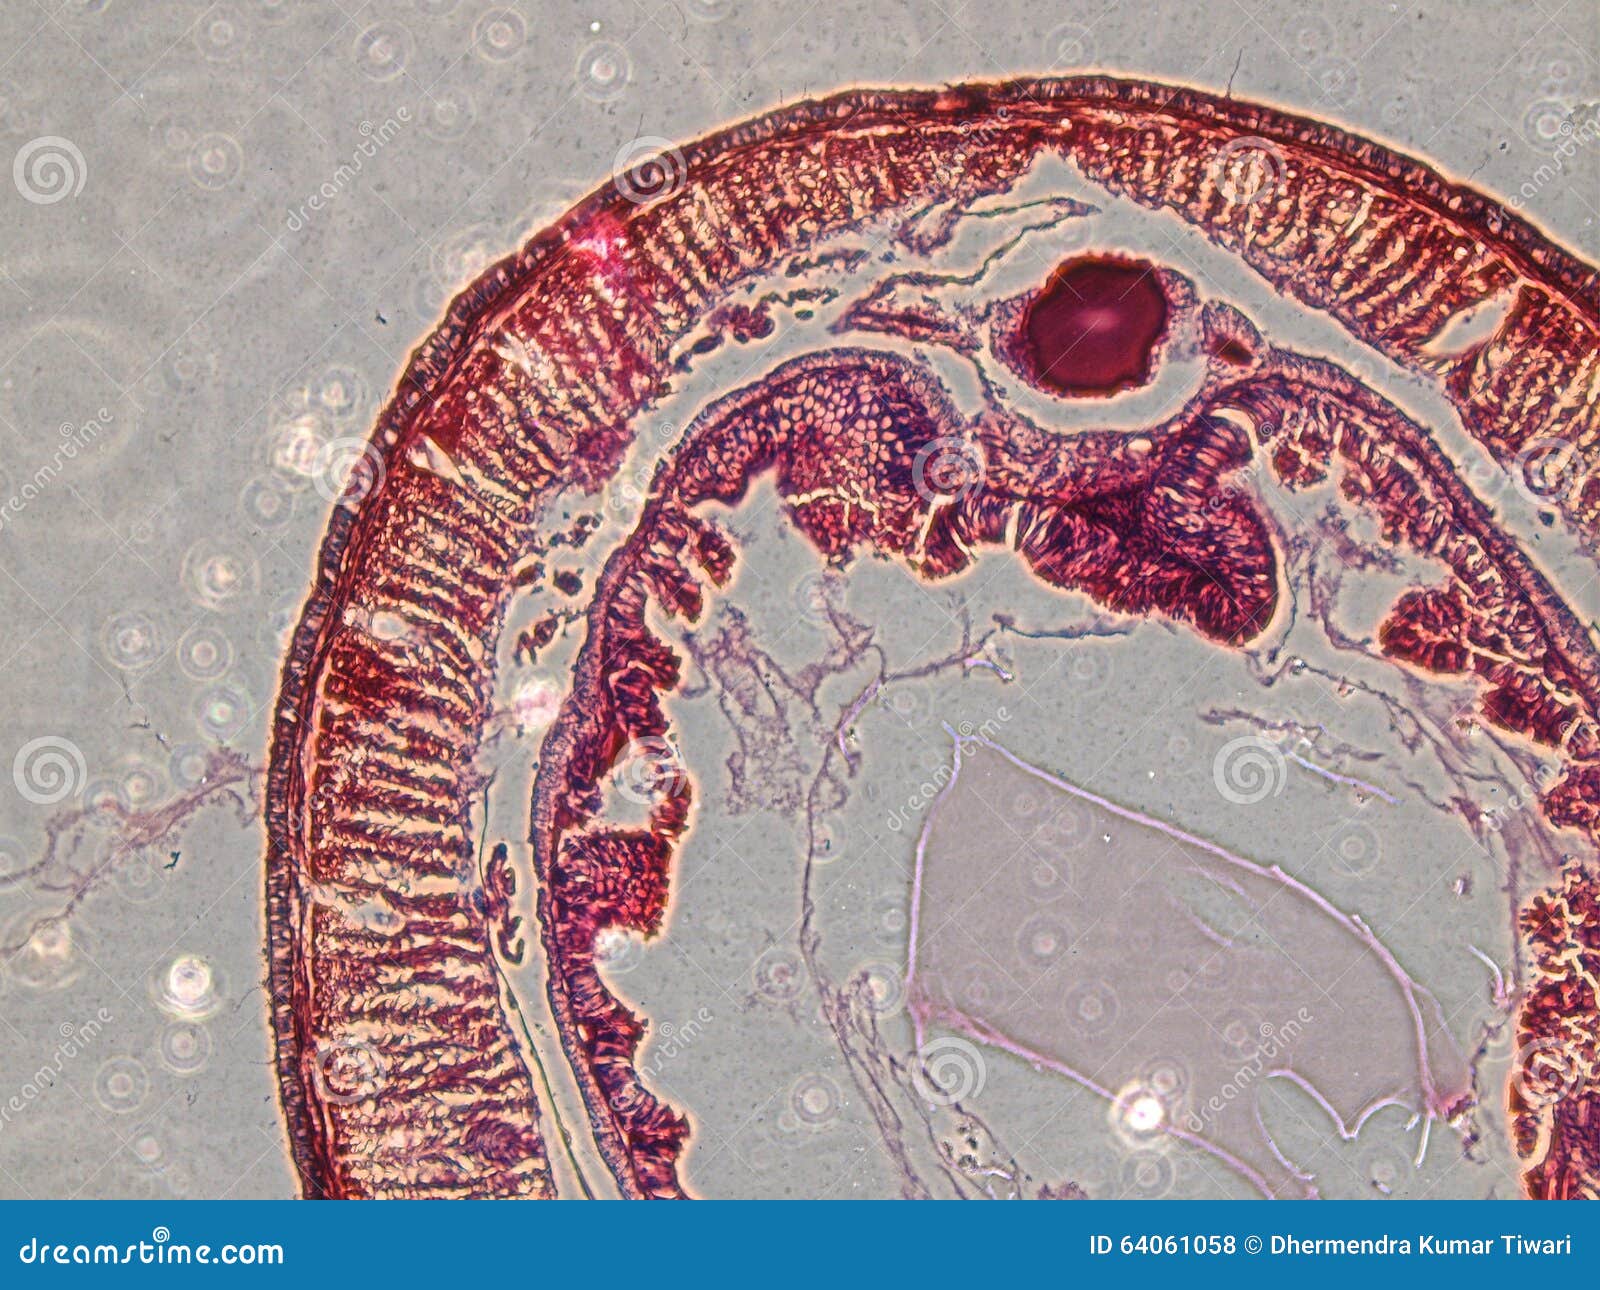 microscopy images of intestine of earthworm